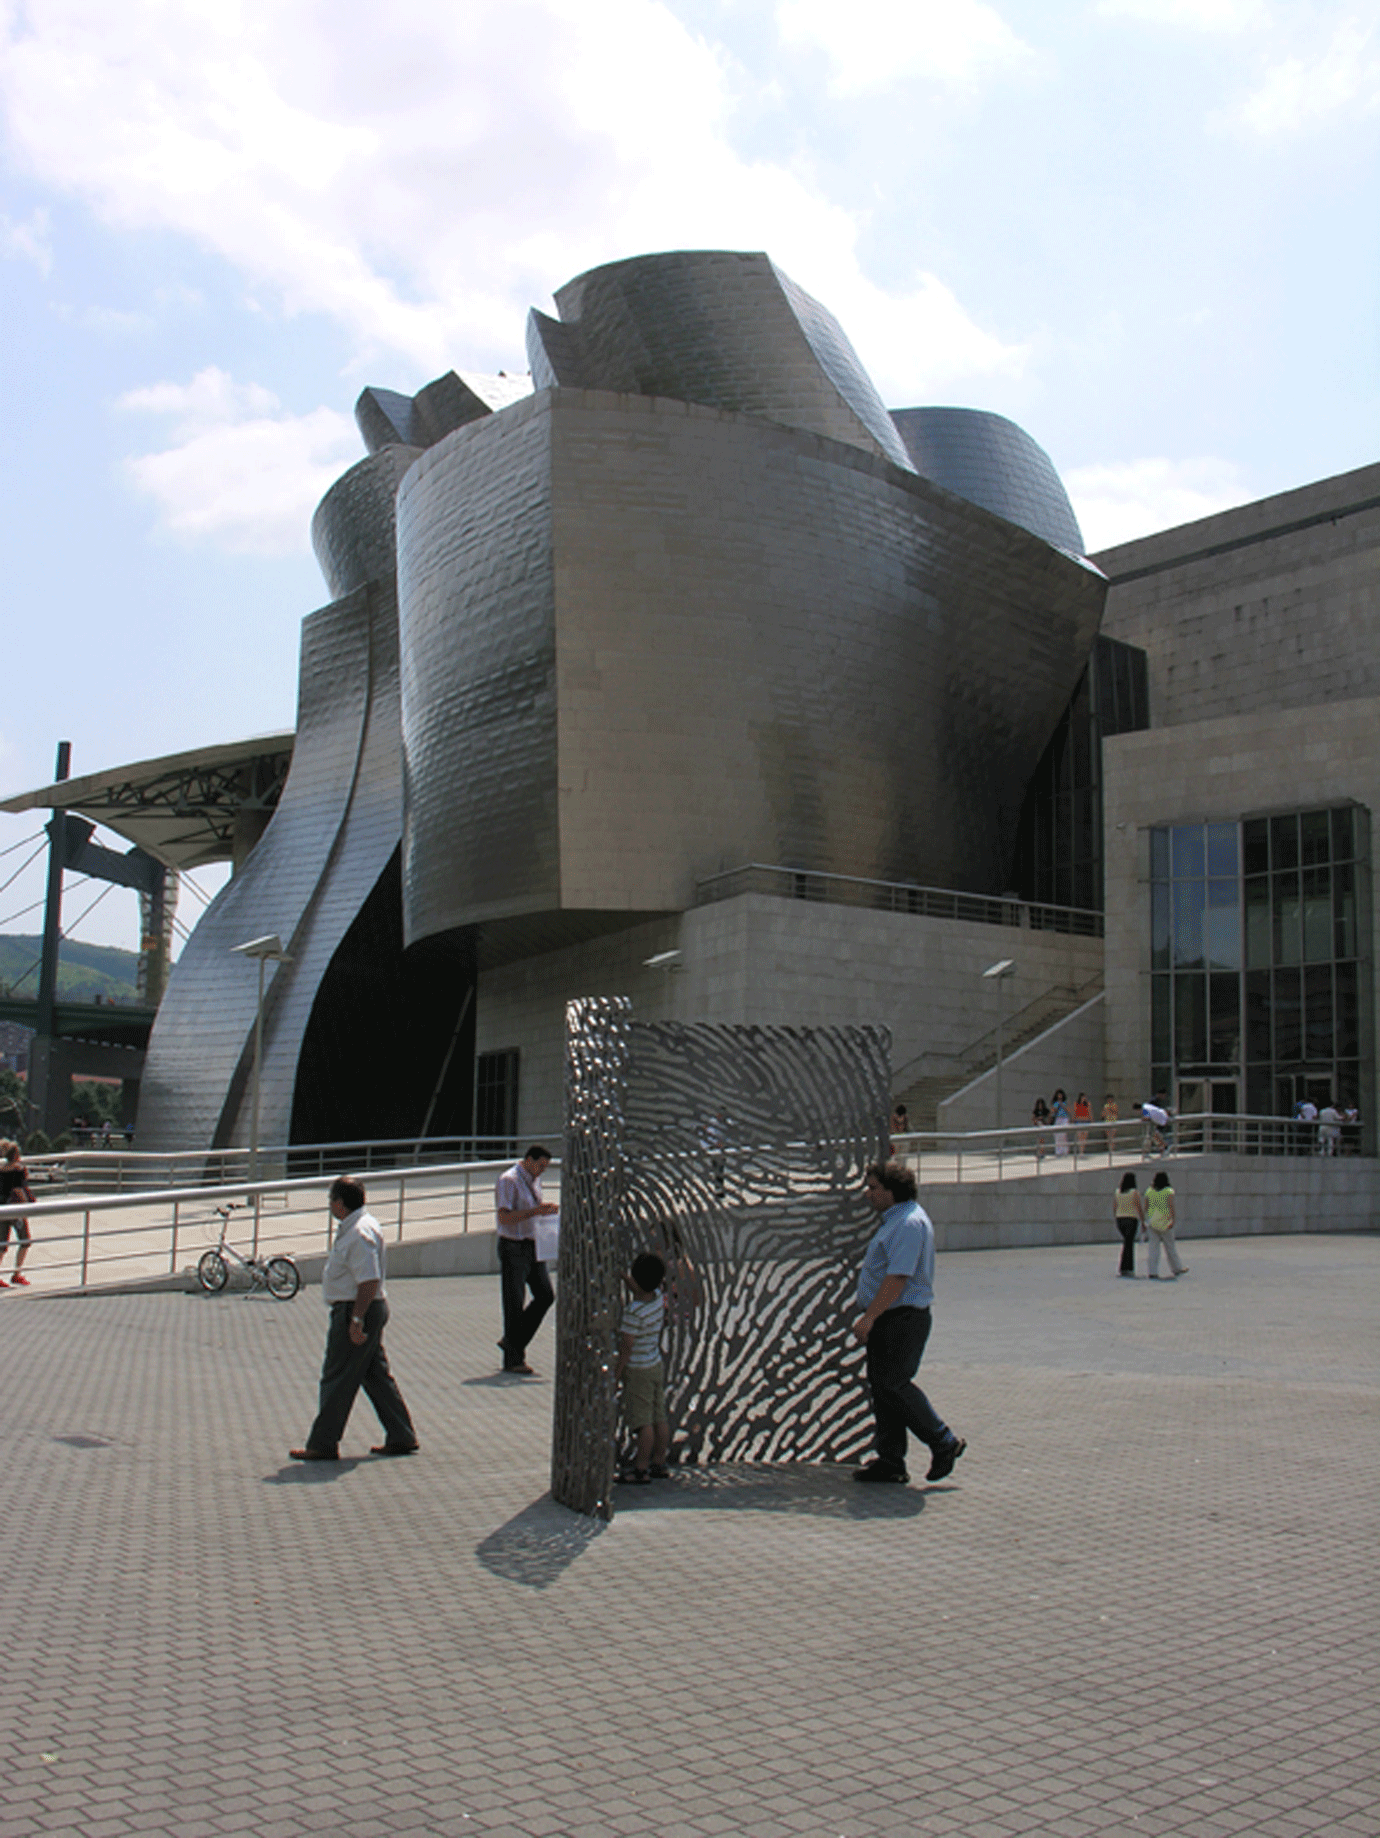 Aterpe, Artxanda, Bilbao. Juanjo Novella